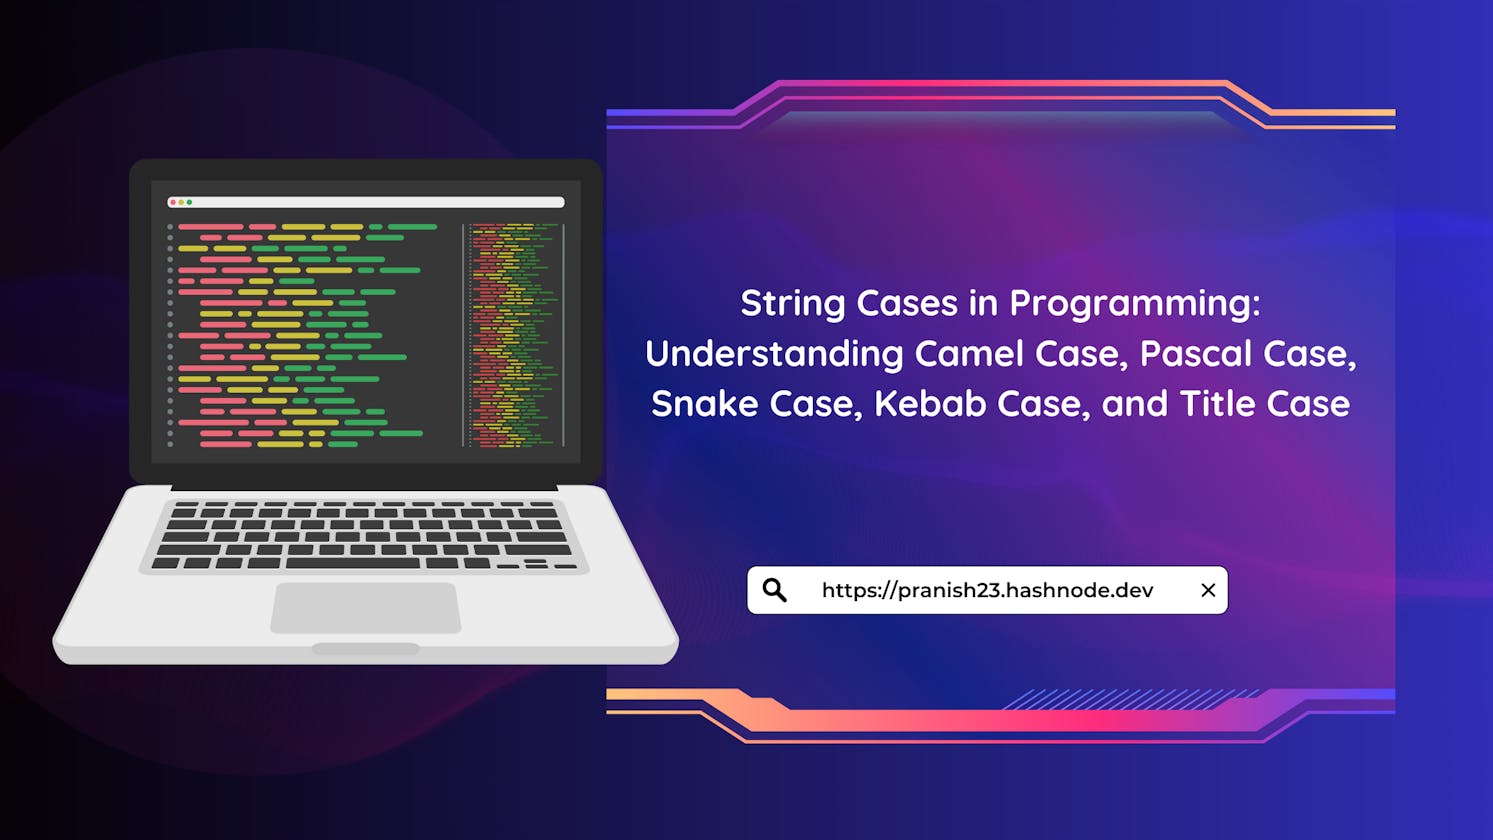 String Cases in Programming: Understanding Camel Case, Pascal Case, Snake Case, Kebab Case, and Title Case